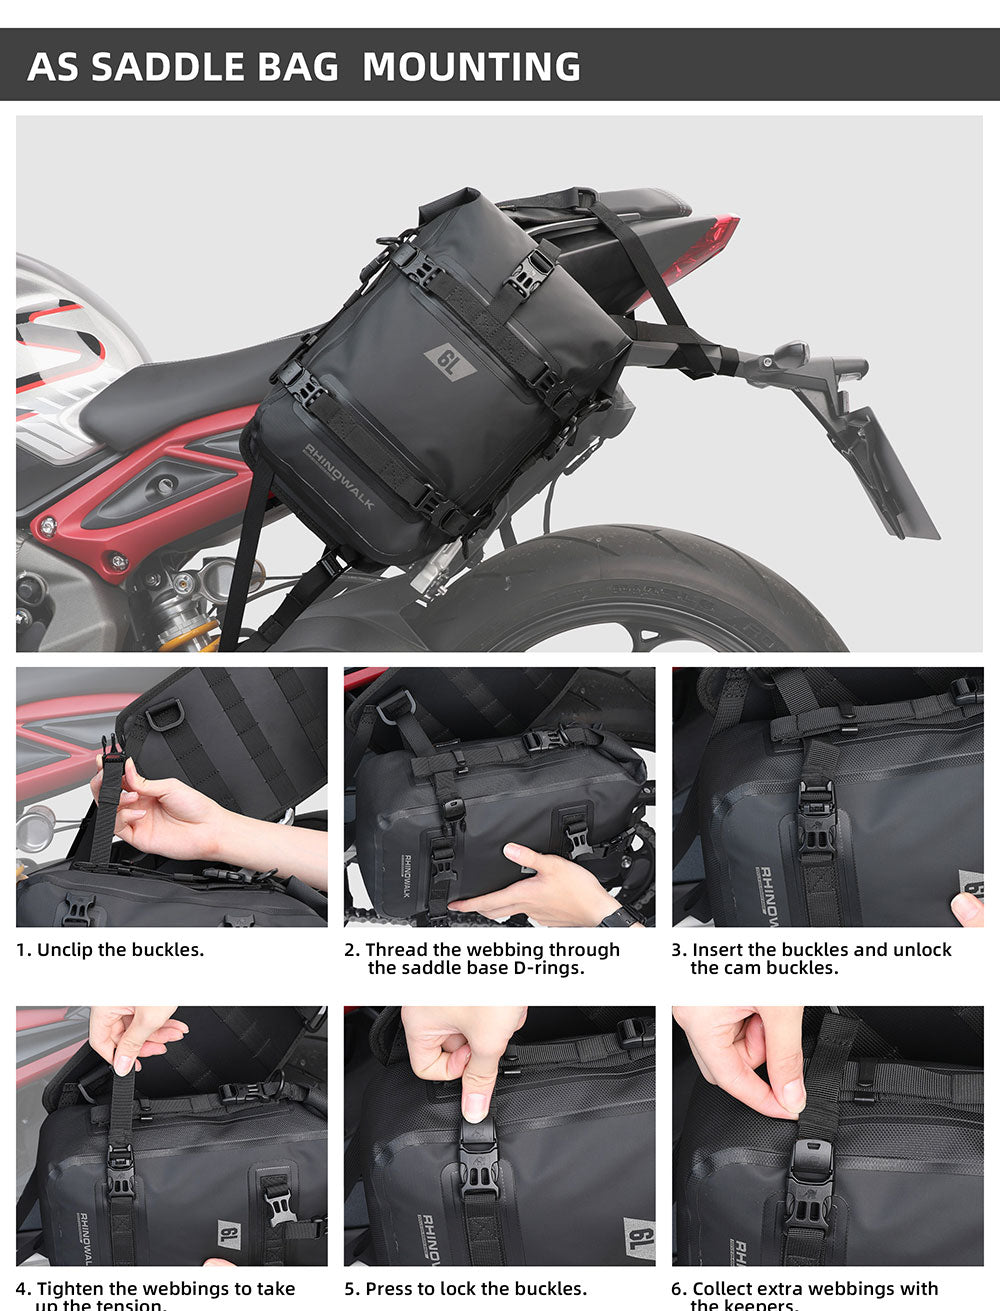 Rhinowalk Motorcycle Bag 6L Waterproof Frame Crash Bars Bumper Bag